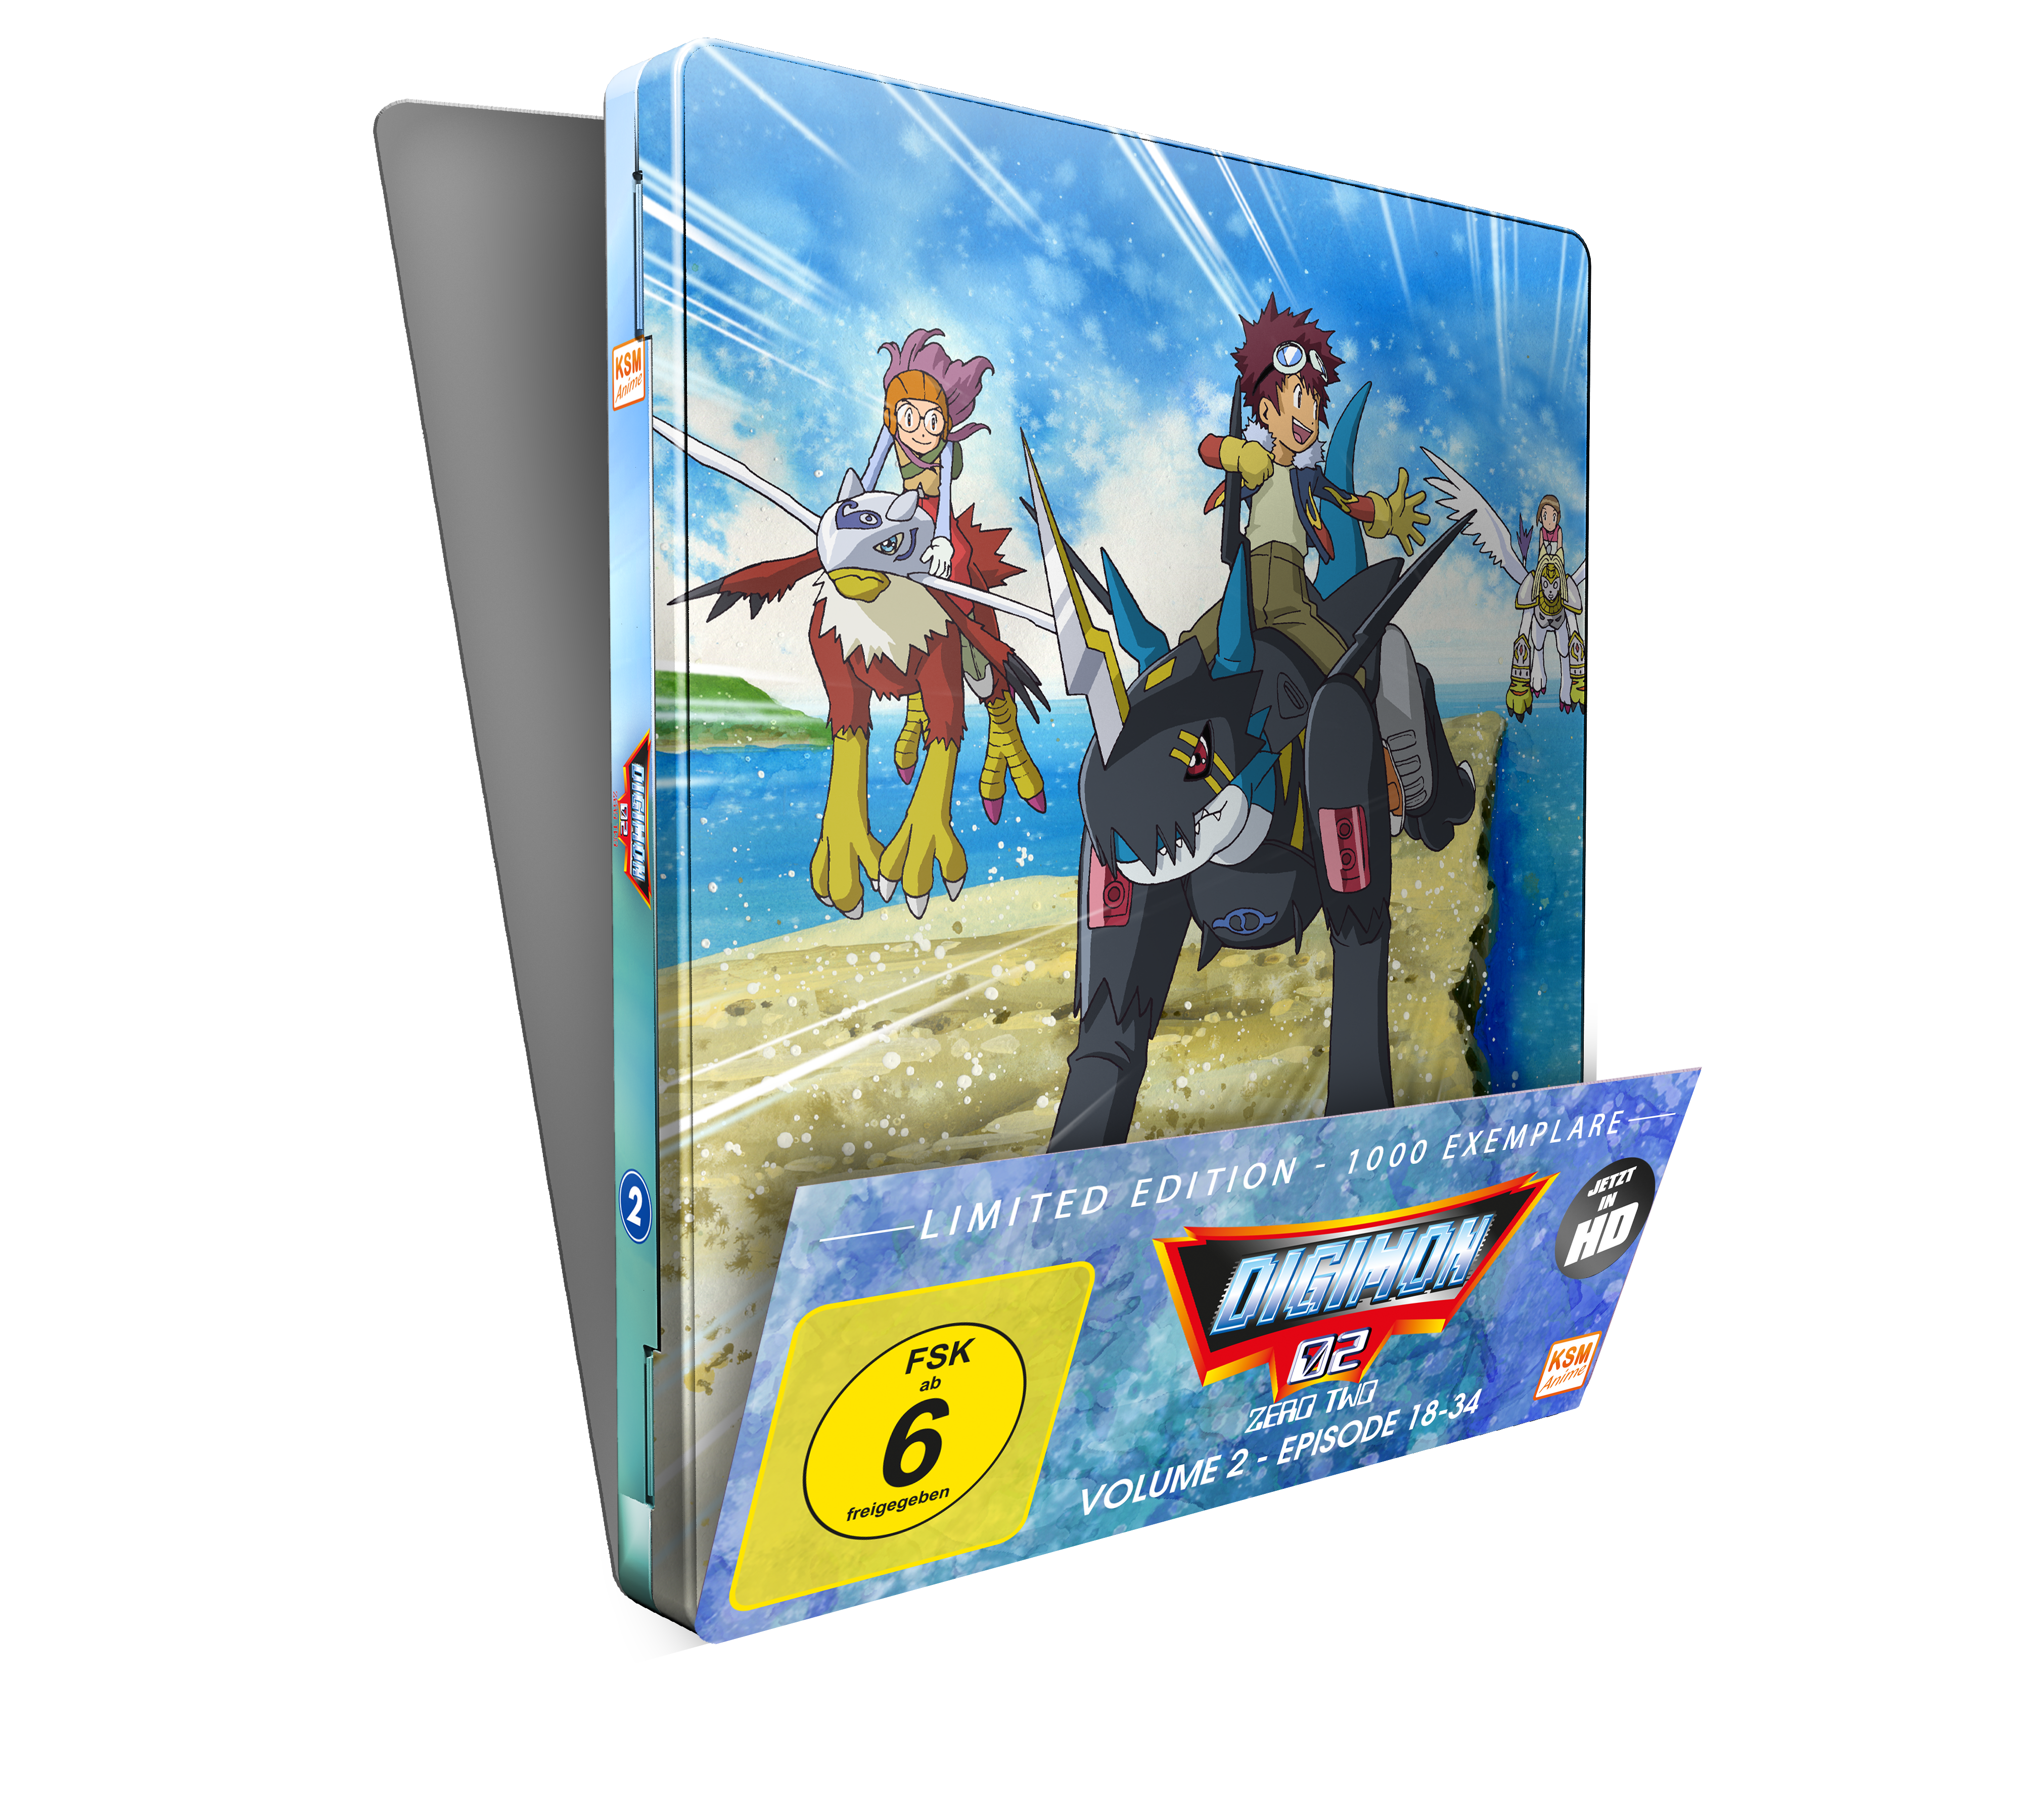 Digimon Adventure 02 - Volume 2 - Limited Edition: Episode 18-34 im FuturePak [Blu-ray] Thumbnail 3